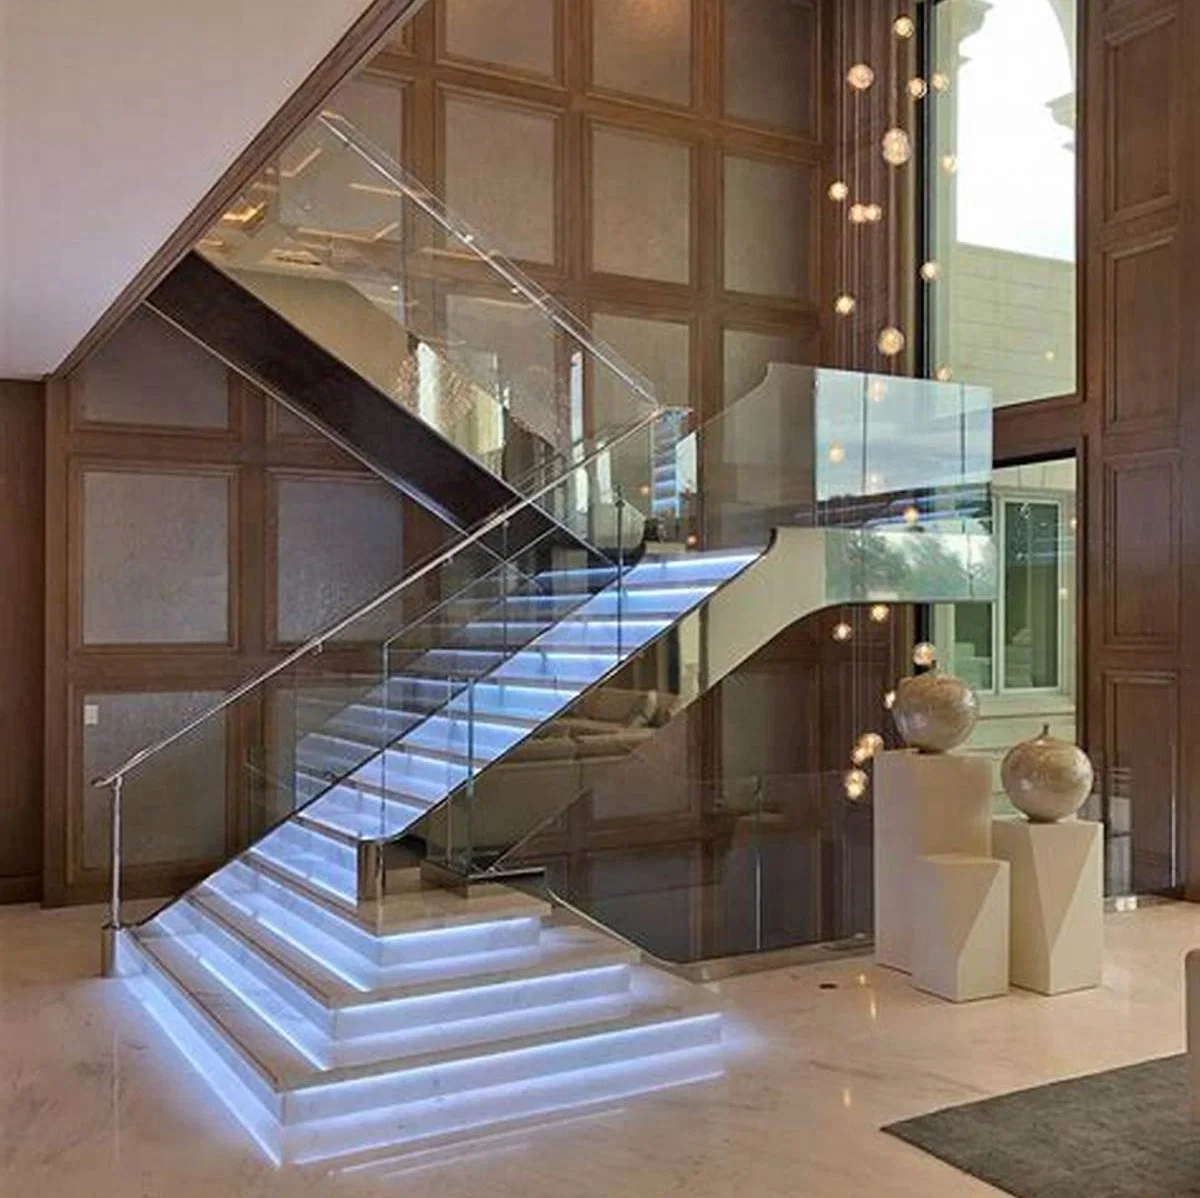 Escalier en marbre avec finition miroir en acier inoxydable, design en forme de U avec rampe en verre.